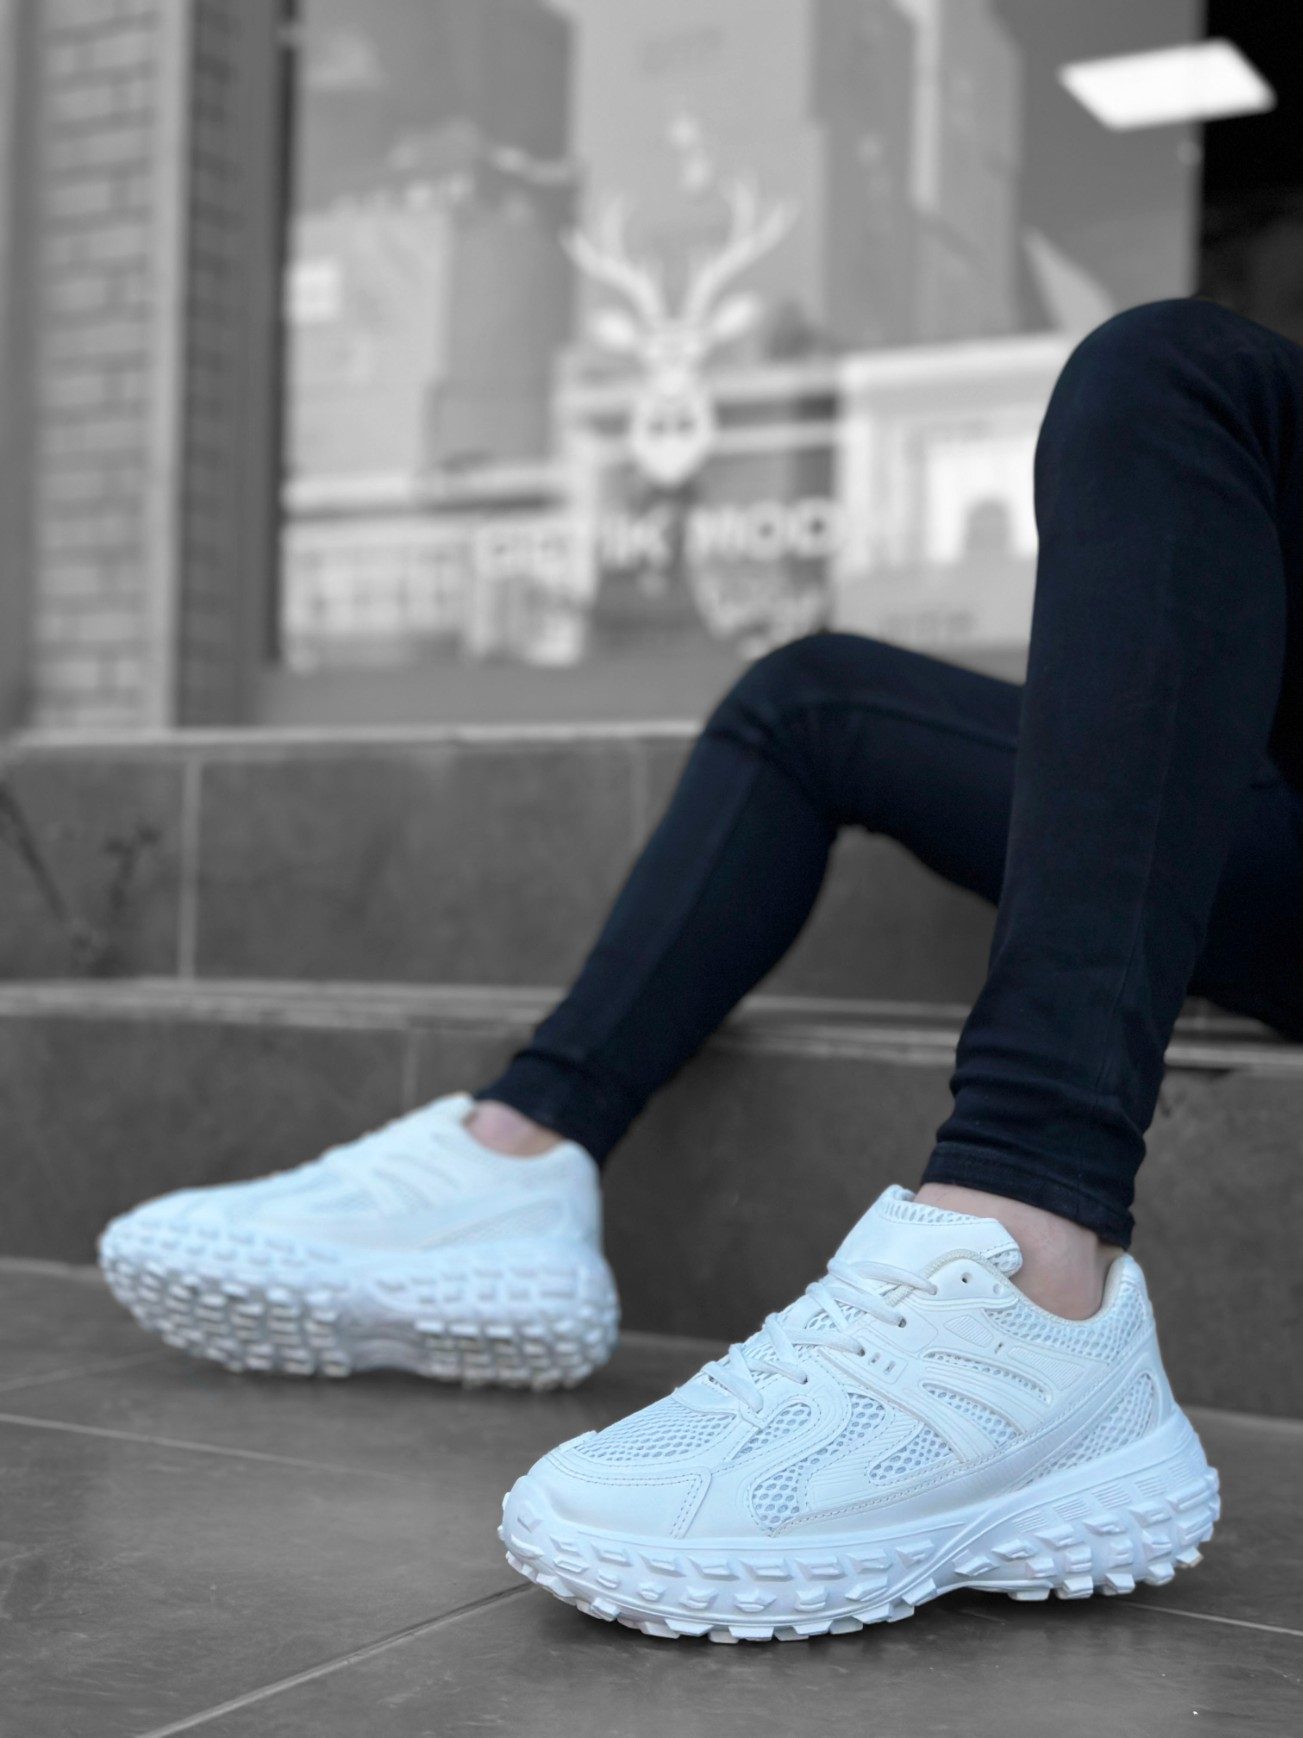 CLZ946 Tarz Sneakers Ithal Beyaz Fileli Rahat Taban Spor Ayakkabısı